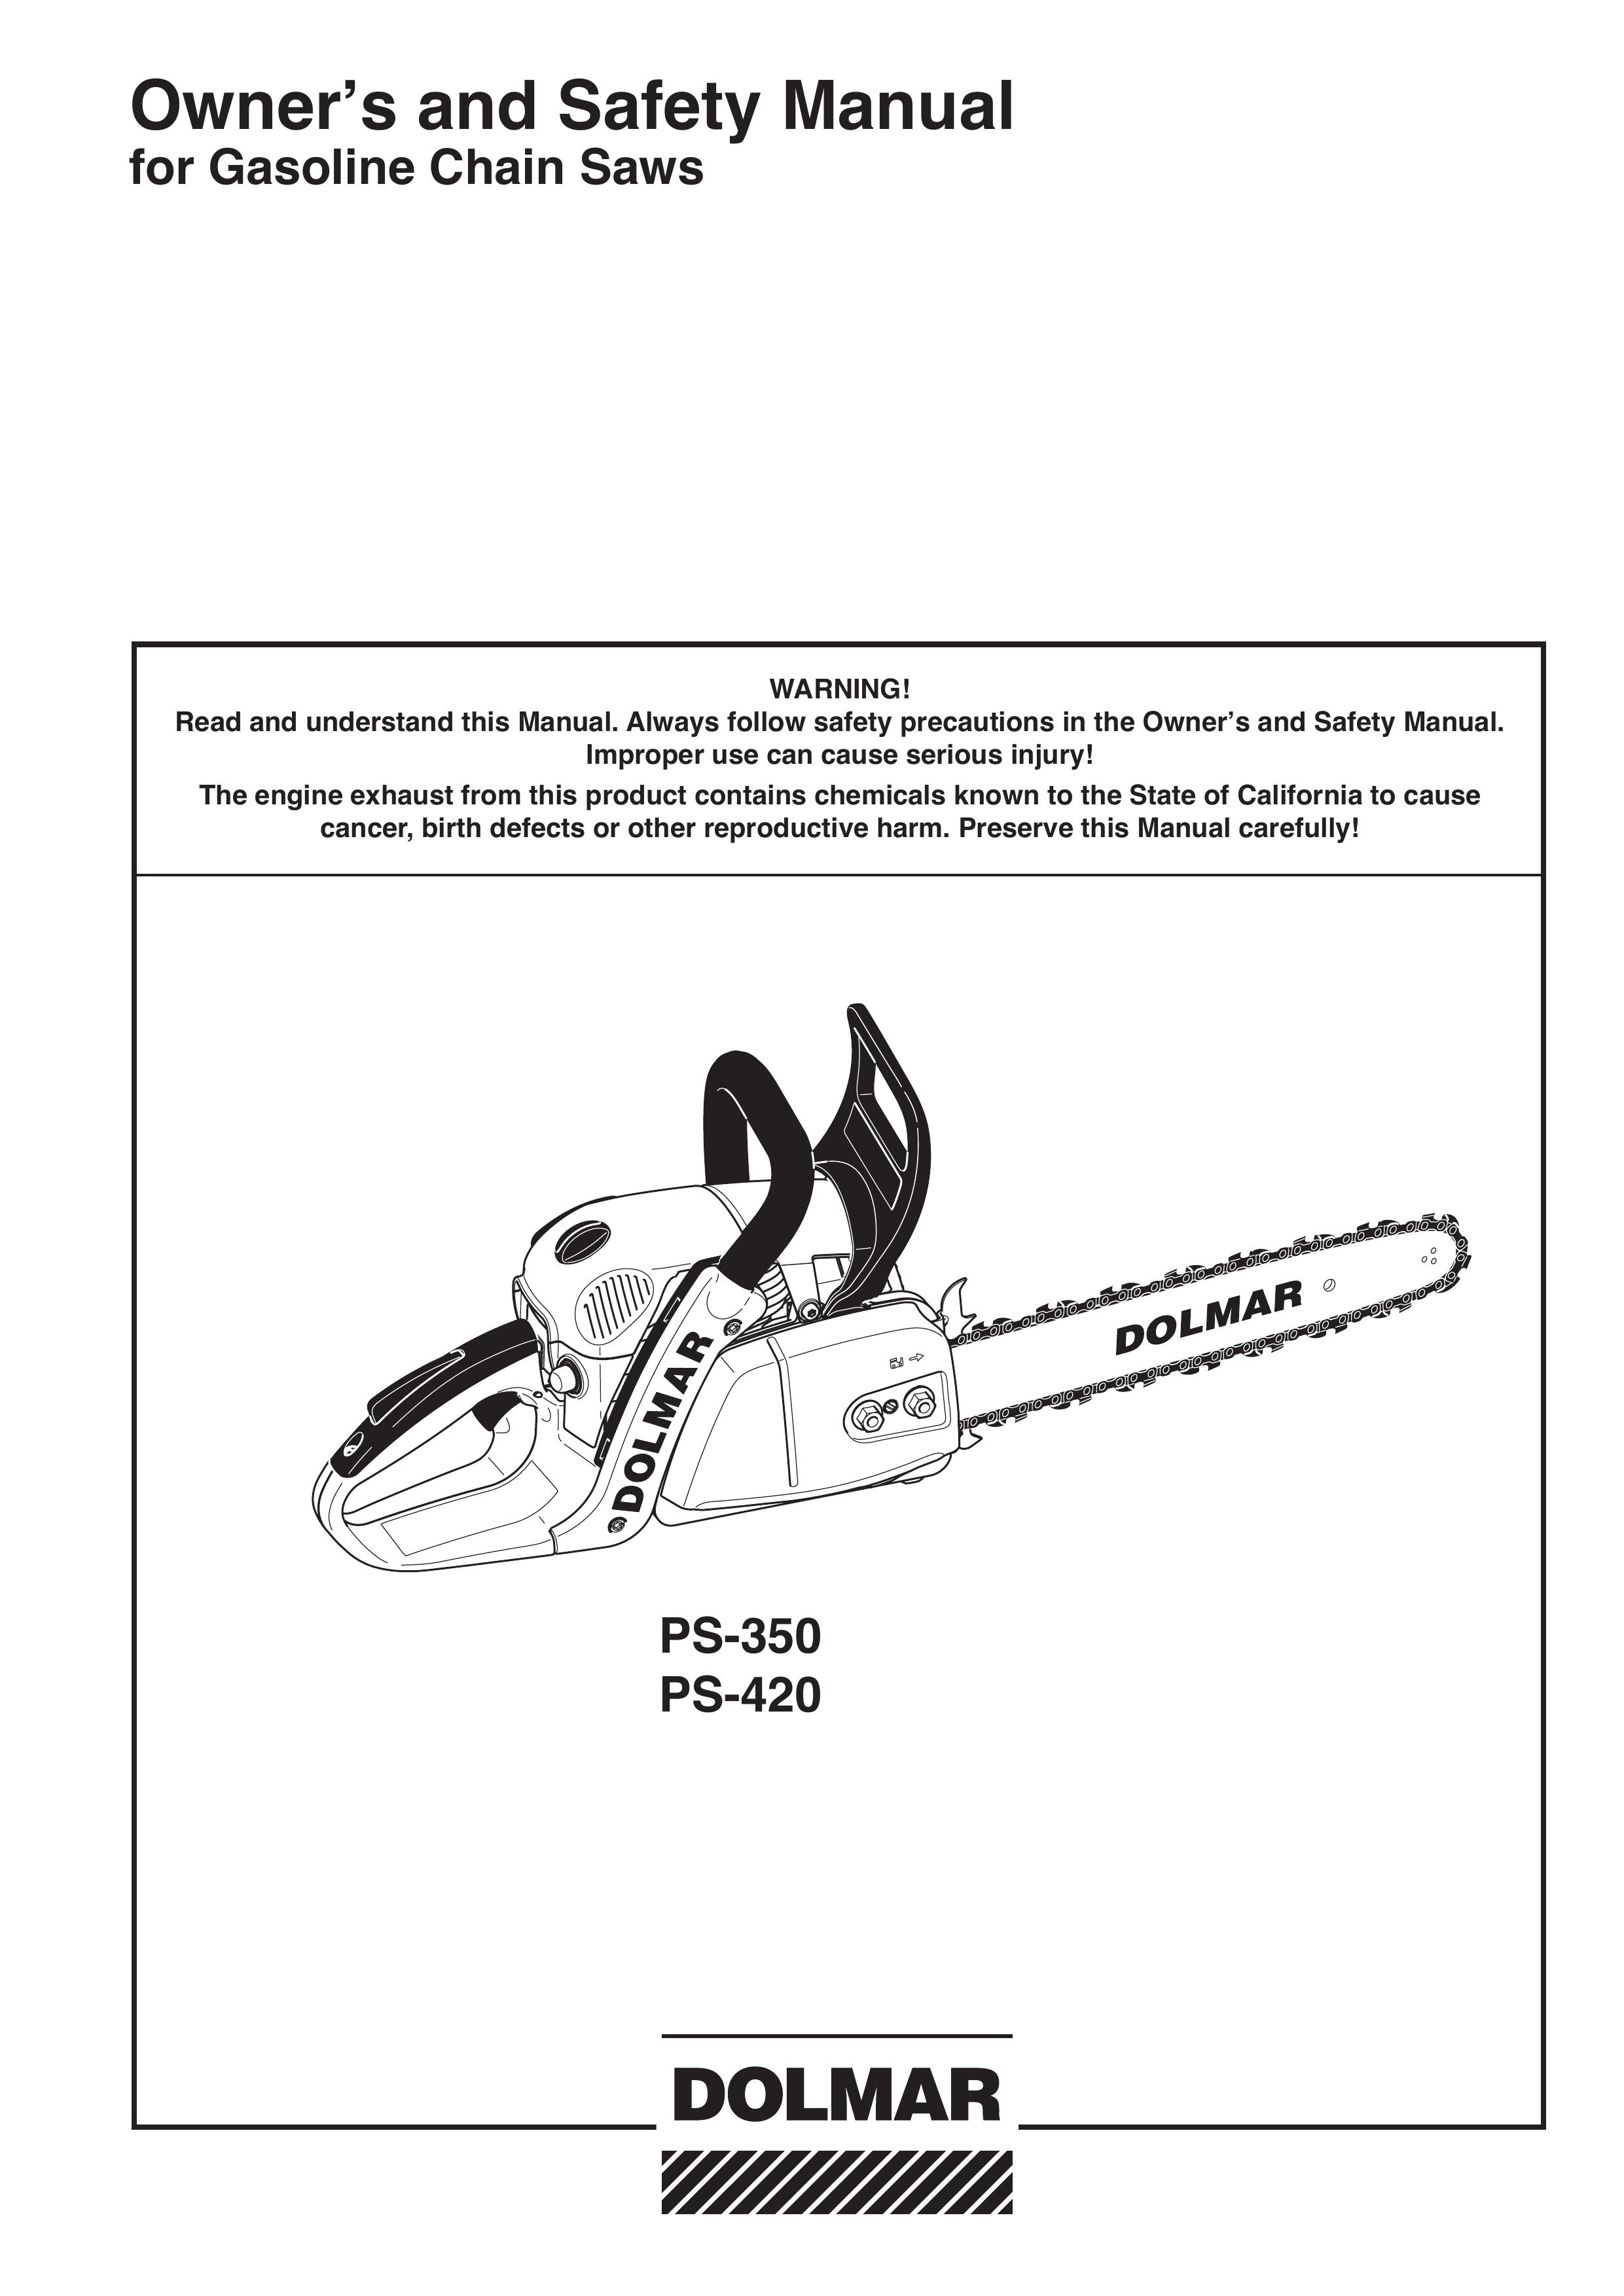 Dolmar PS-420 Chainsaw User Manual